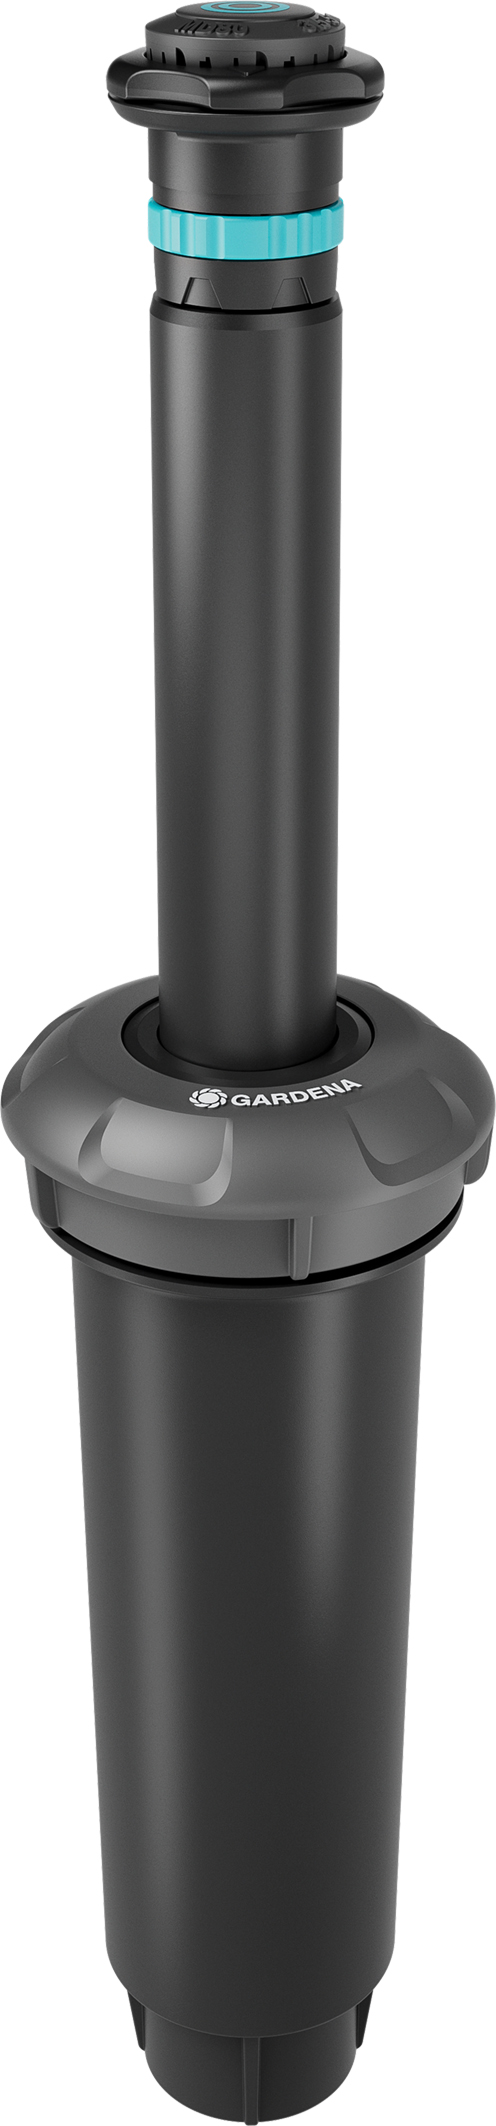 GARDENA Pop-up Sprinkler MD80